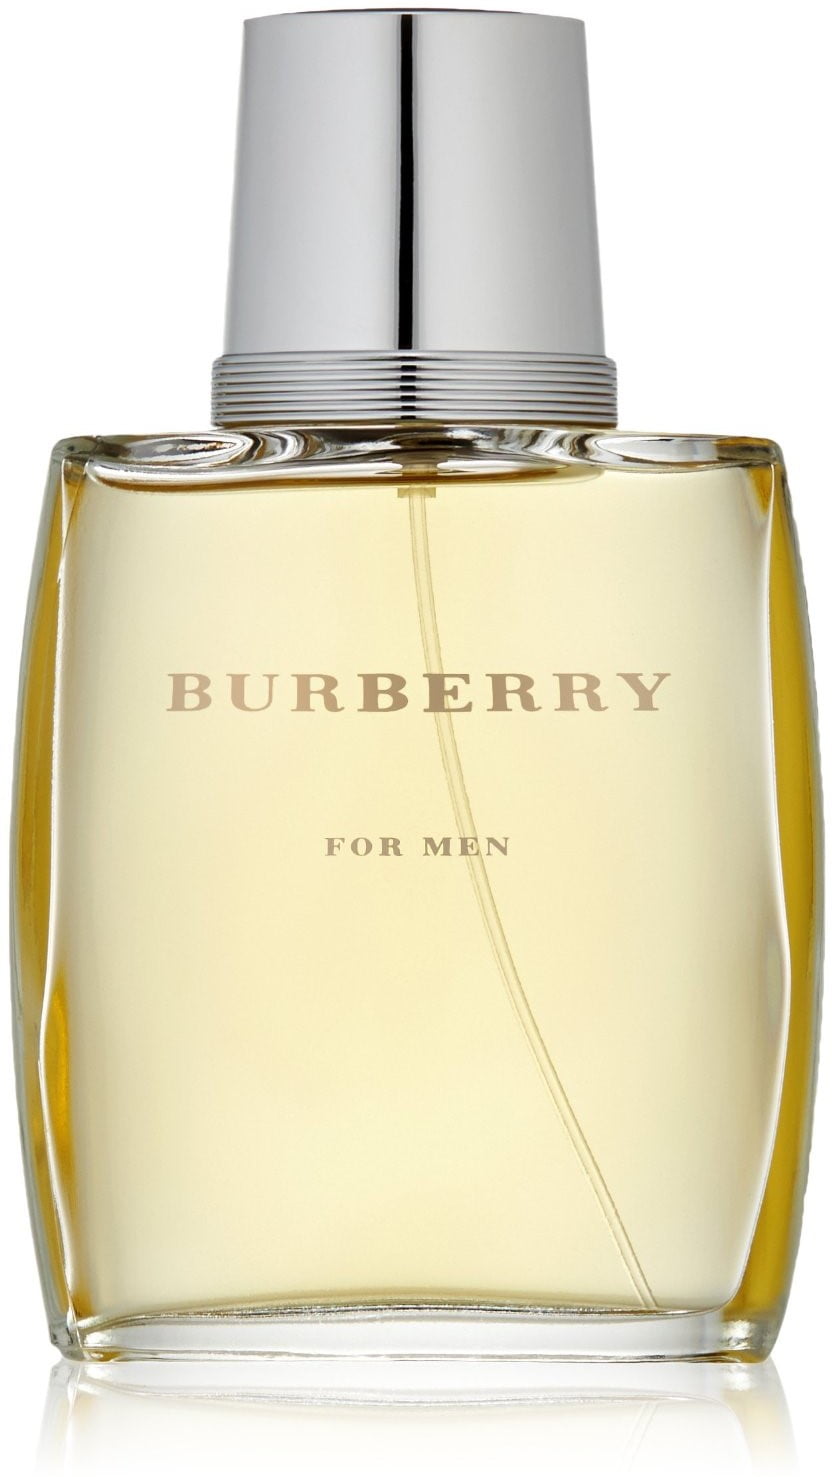 burberry classic men's cologne